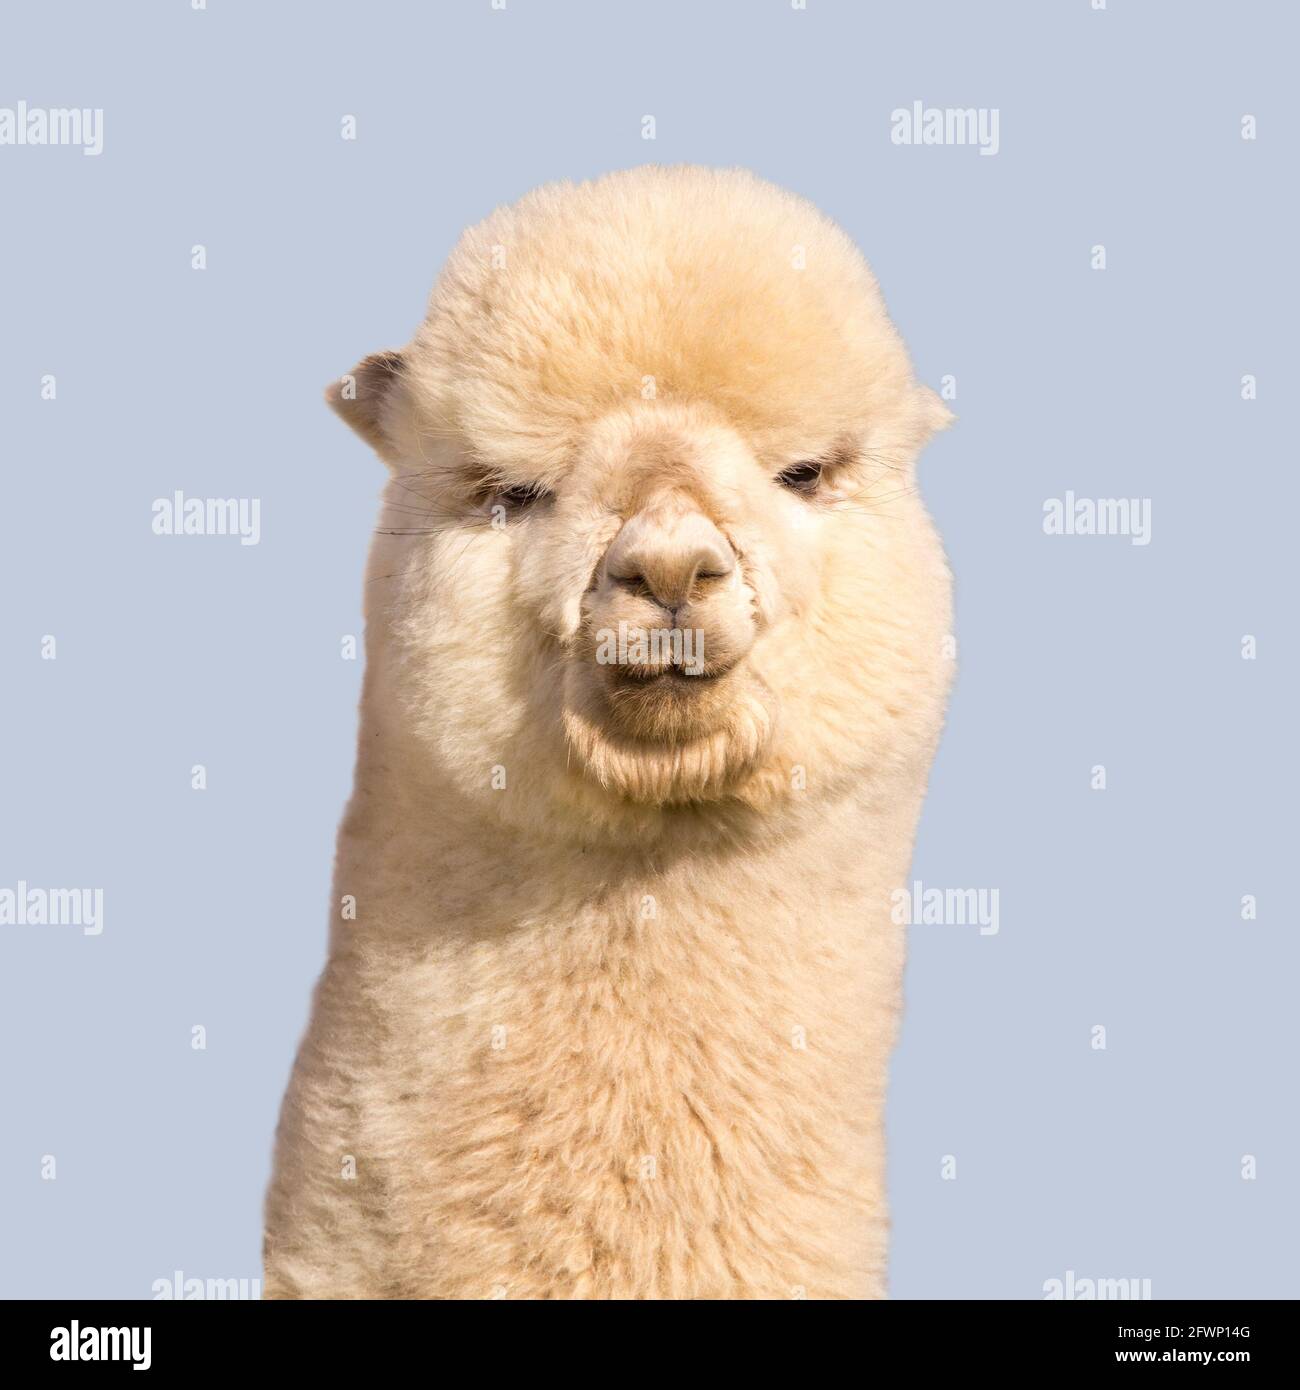 Funny white alpaca on blue background Stock Photo